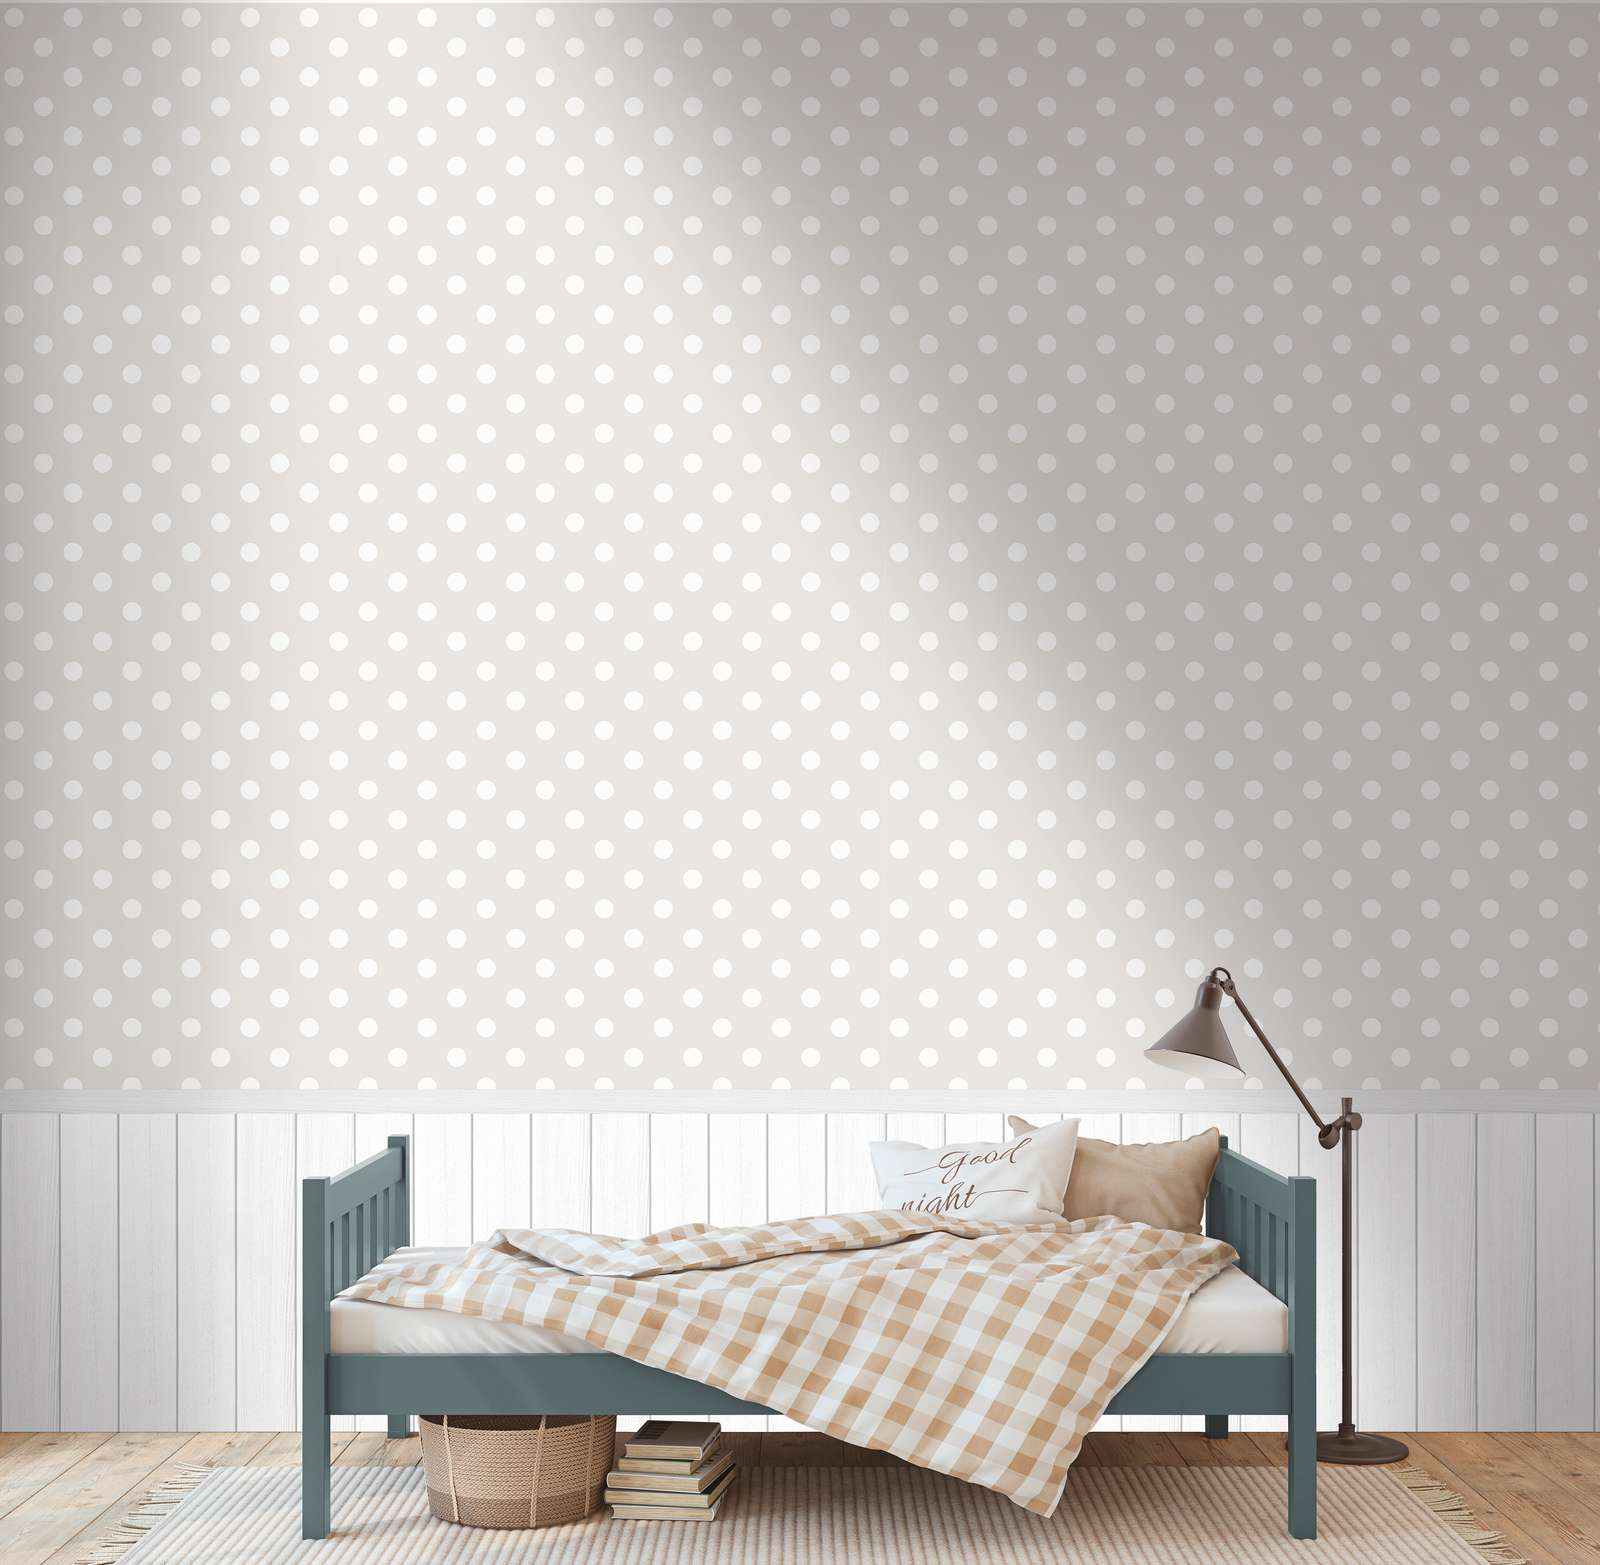             Non-woven motif wallpaper with wood-effect plinth border and dot pattern - white, grey
        